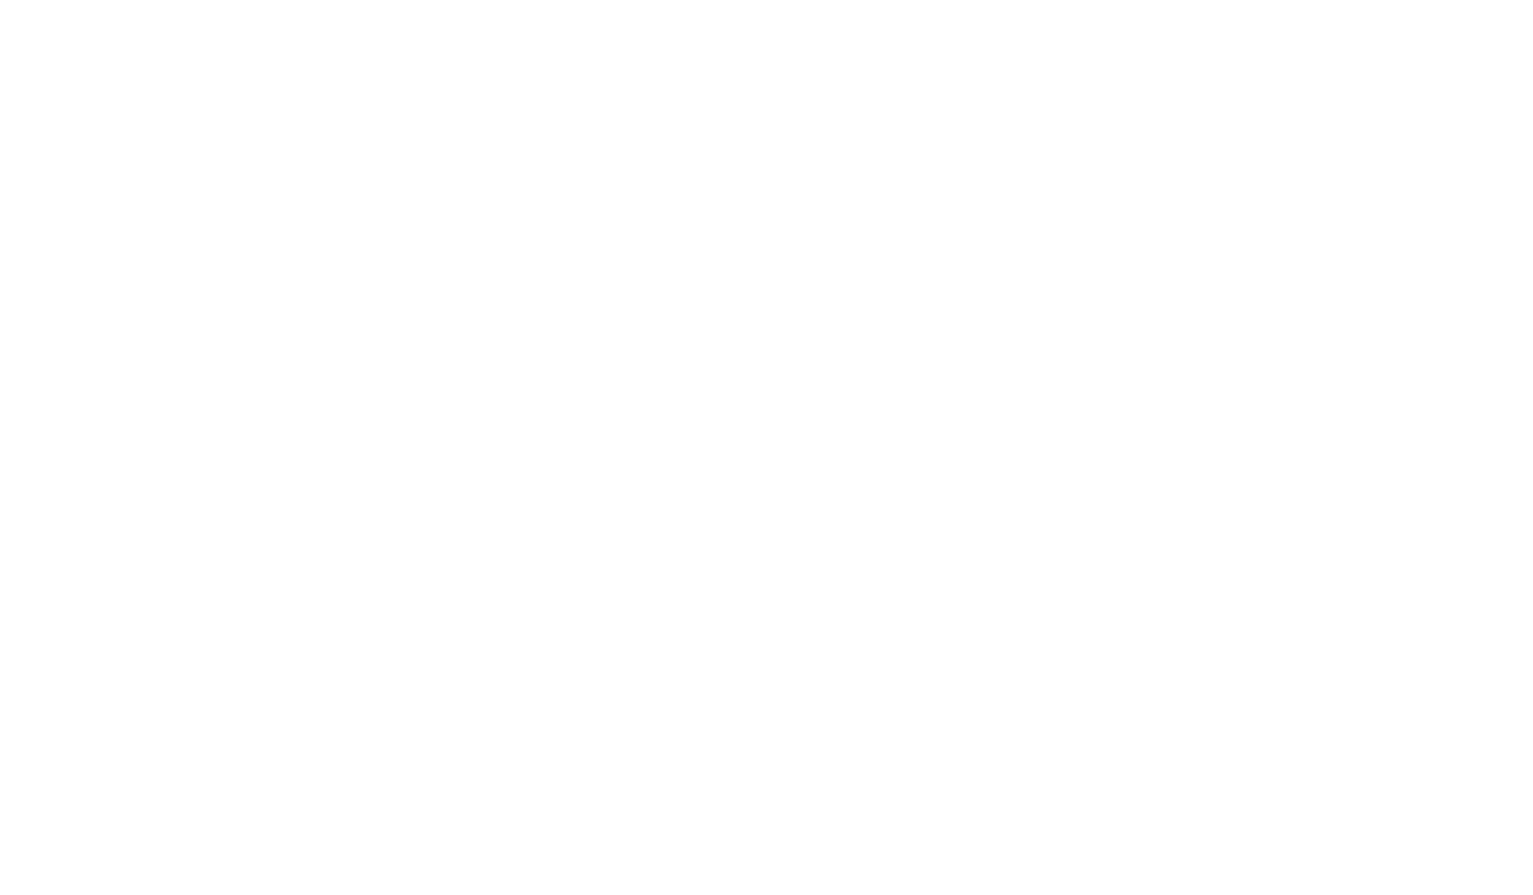 Technical Talents